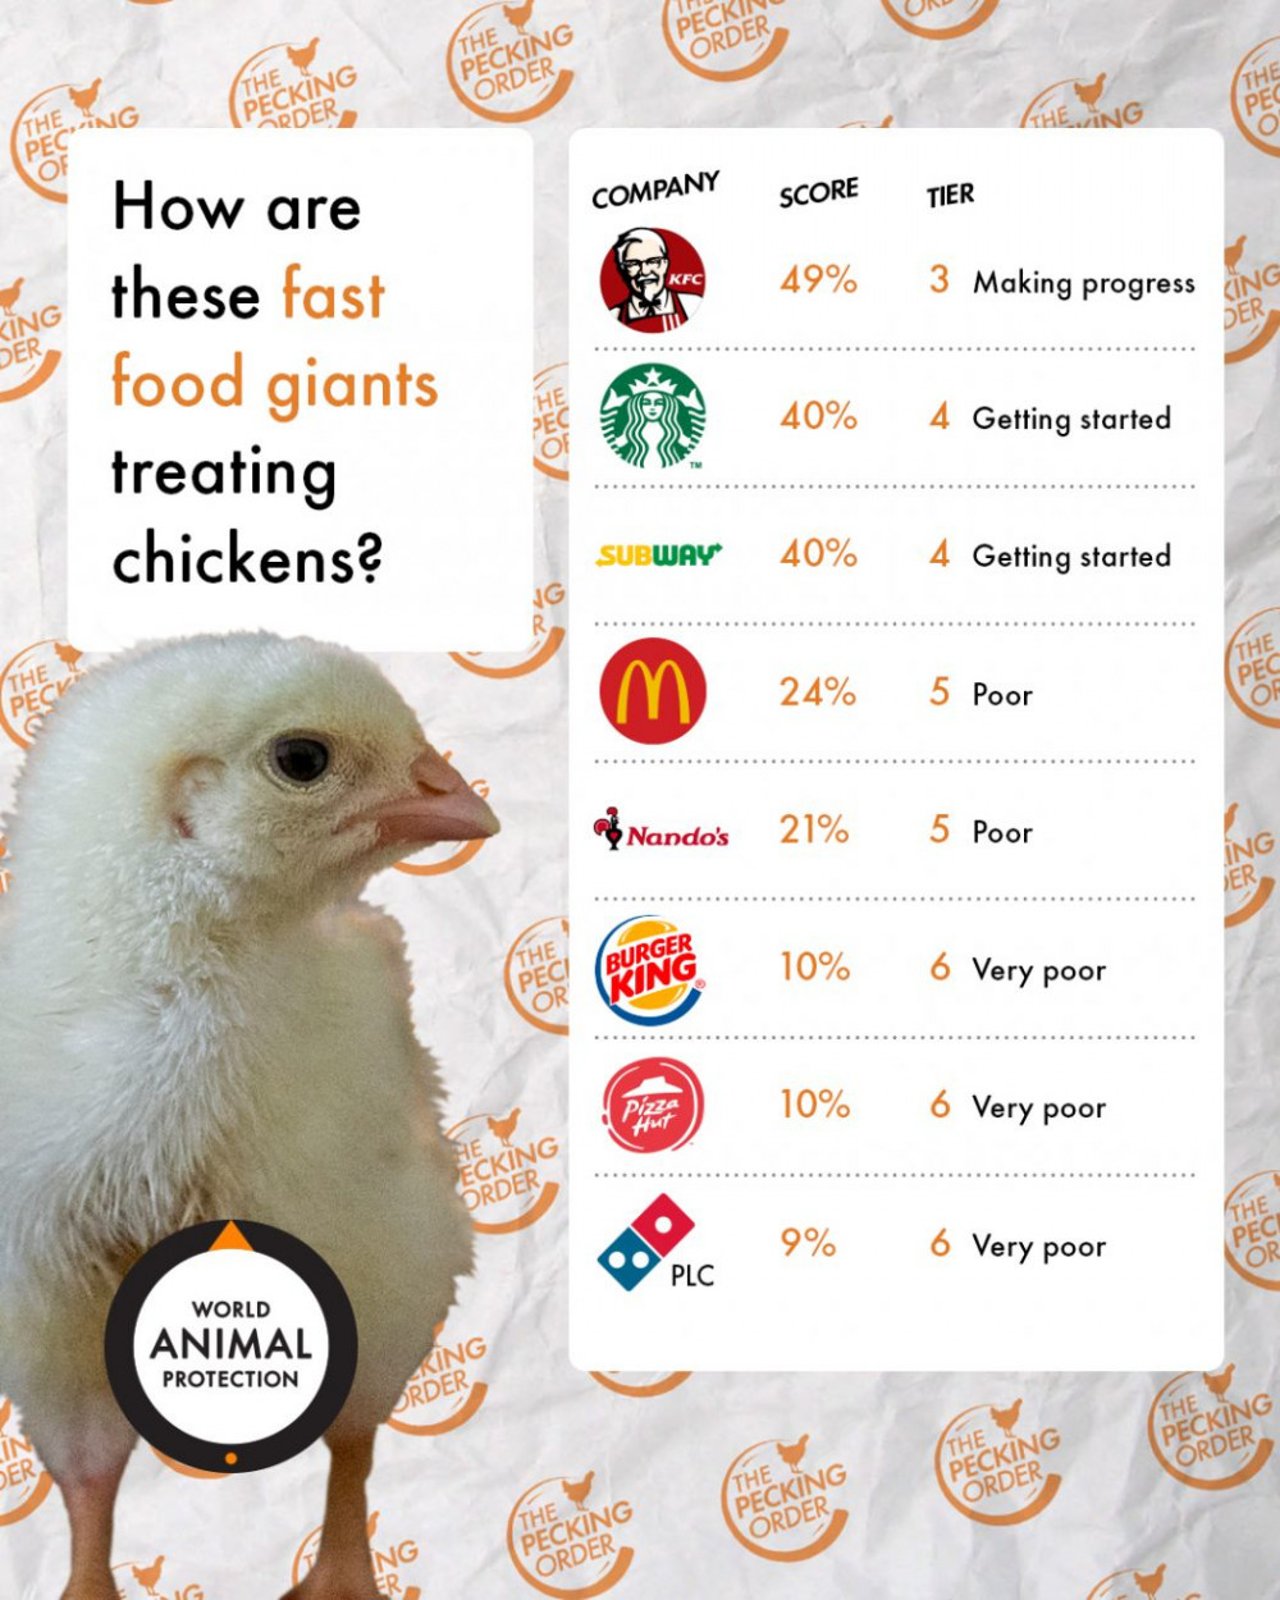 The Pecking Order rangordner fastfoodkæderne i forhold til dyrevelfærd